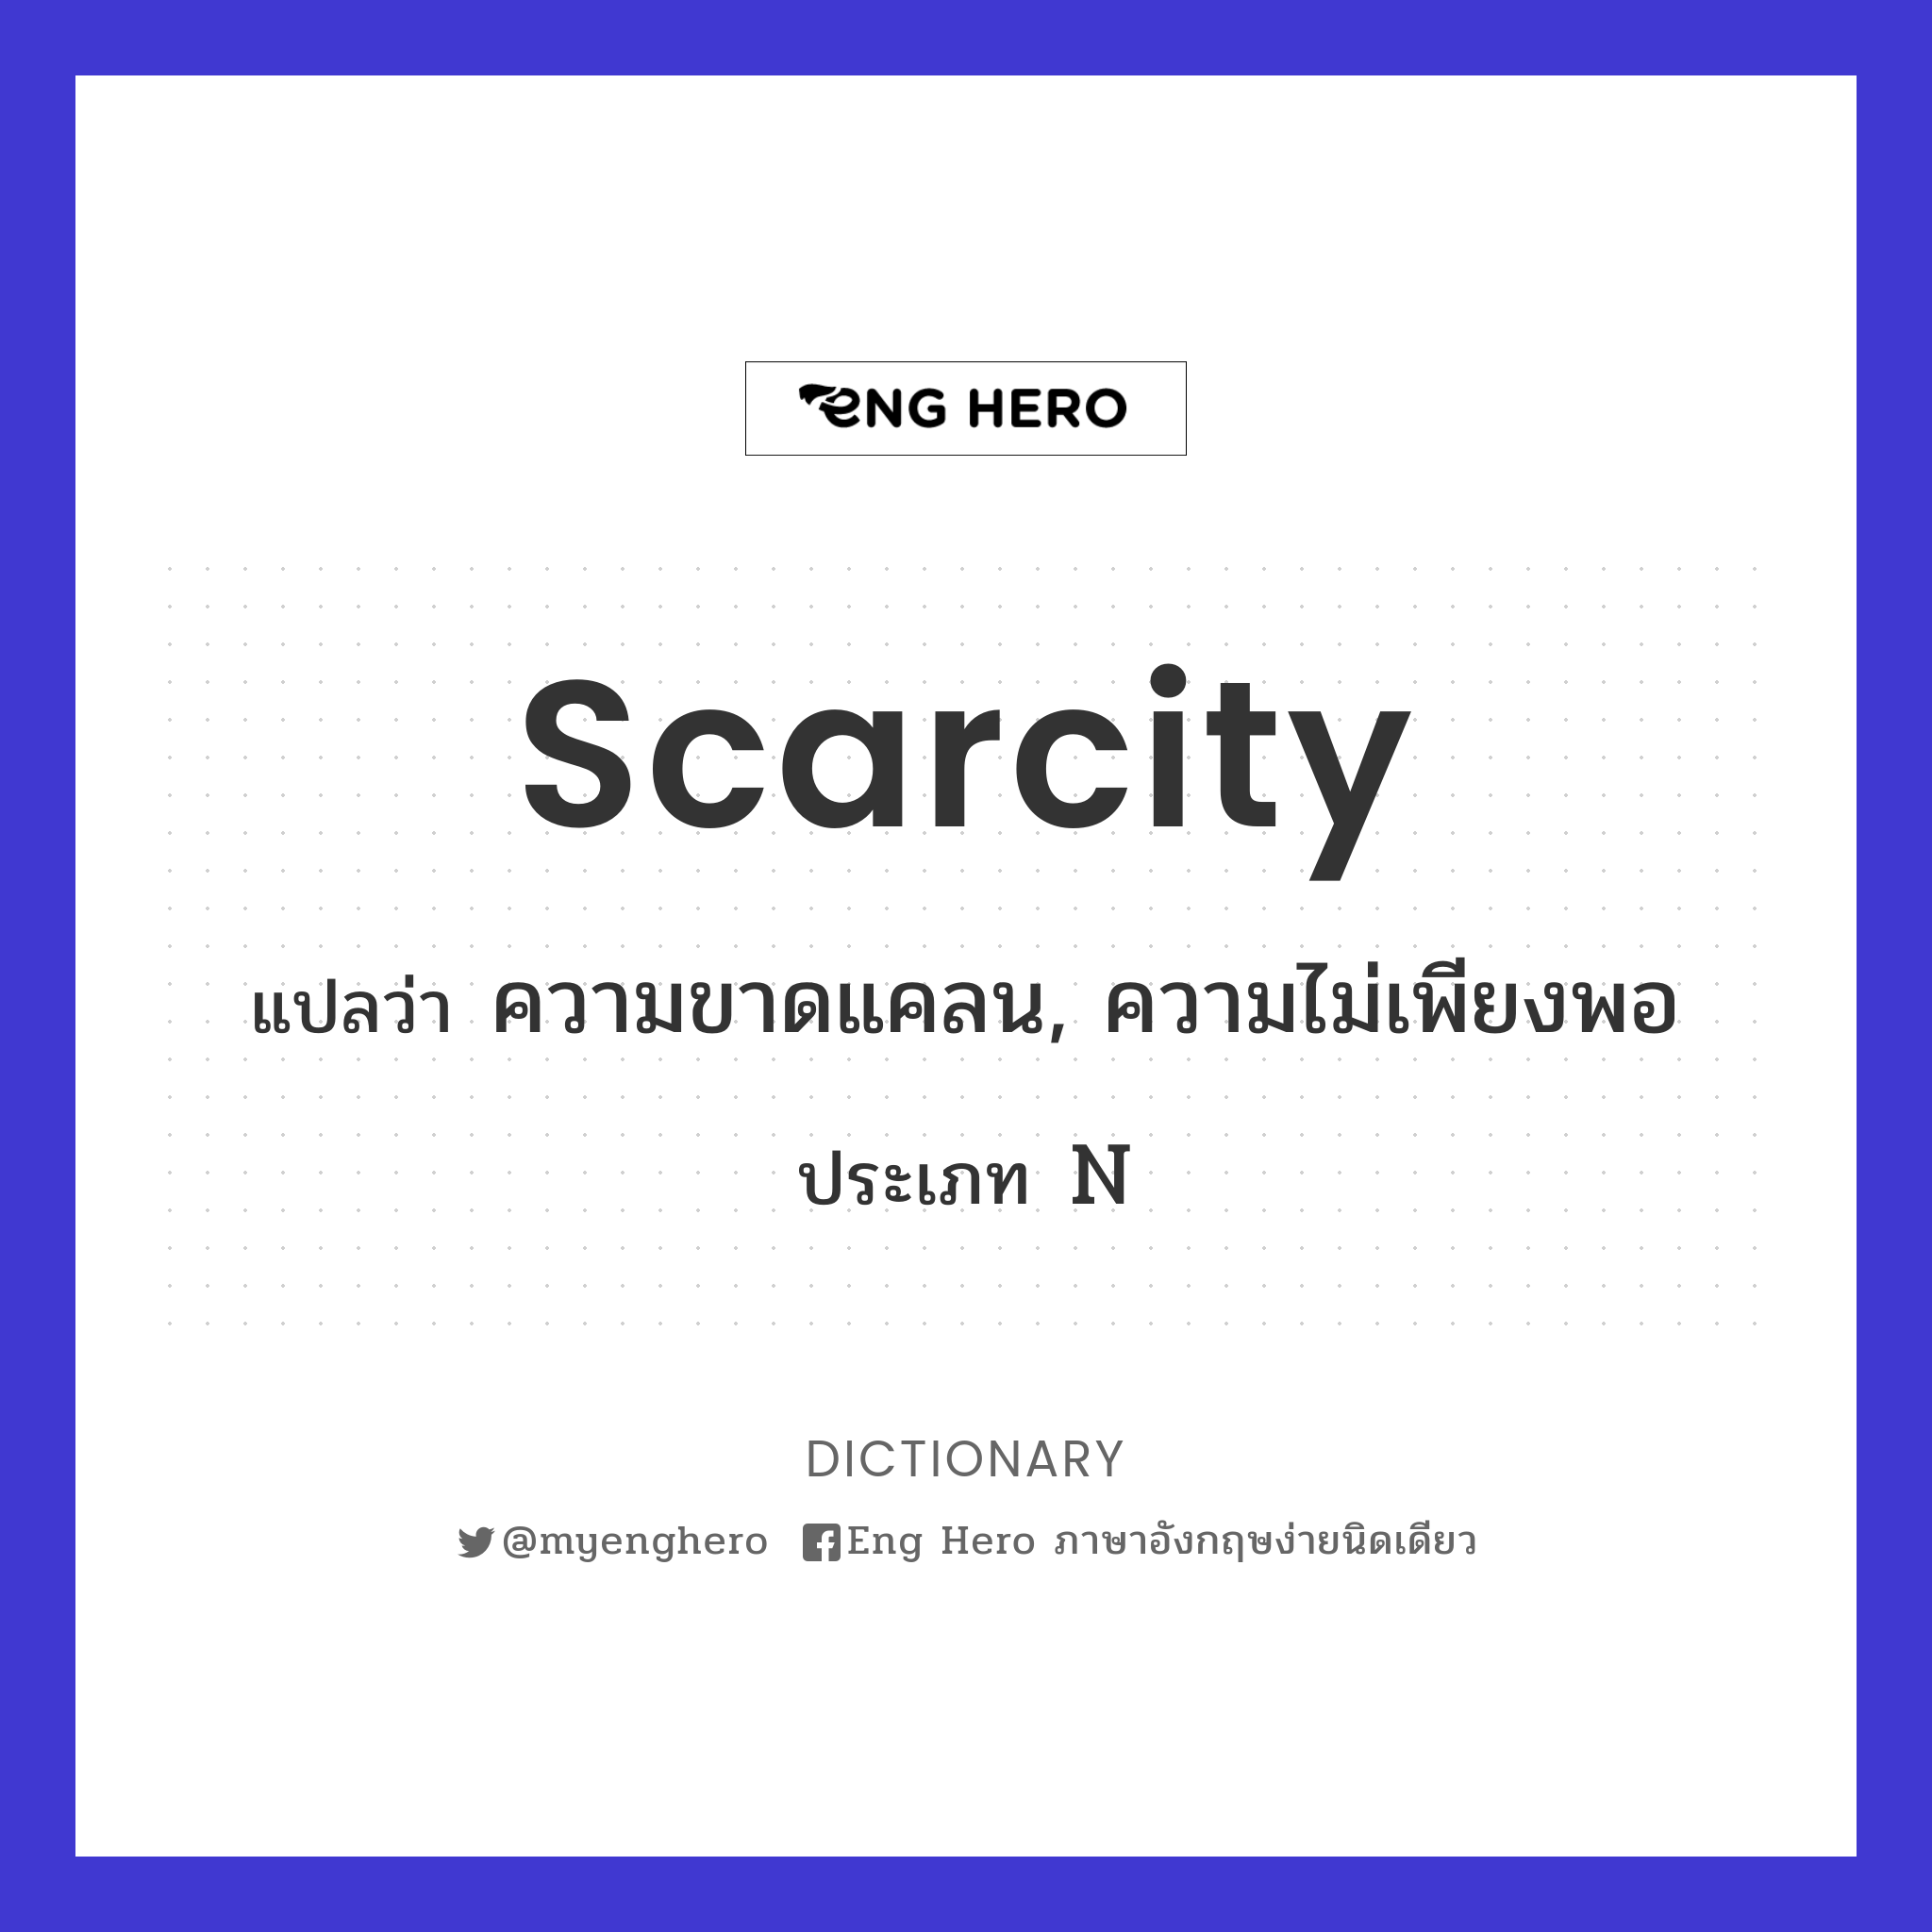 scarcity